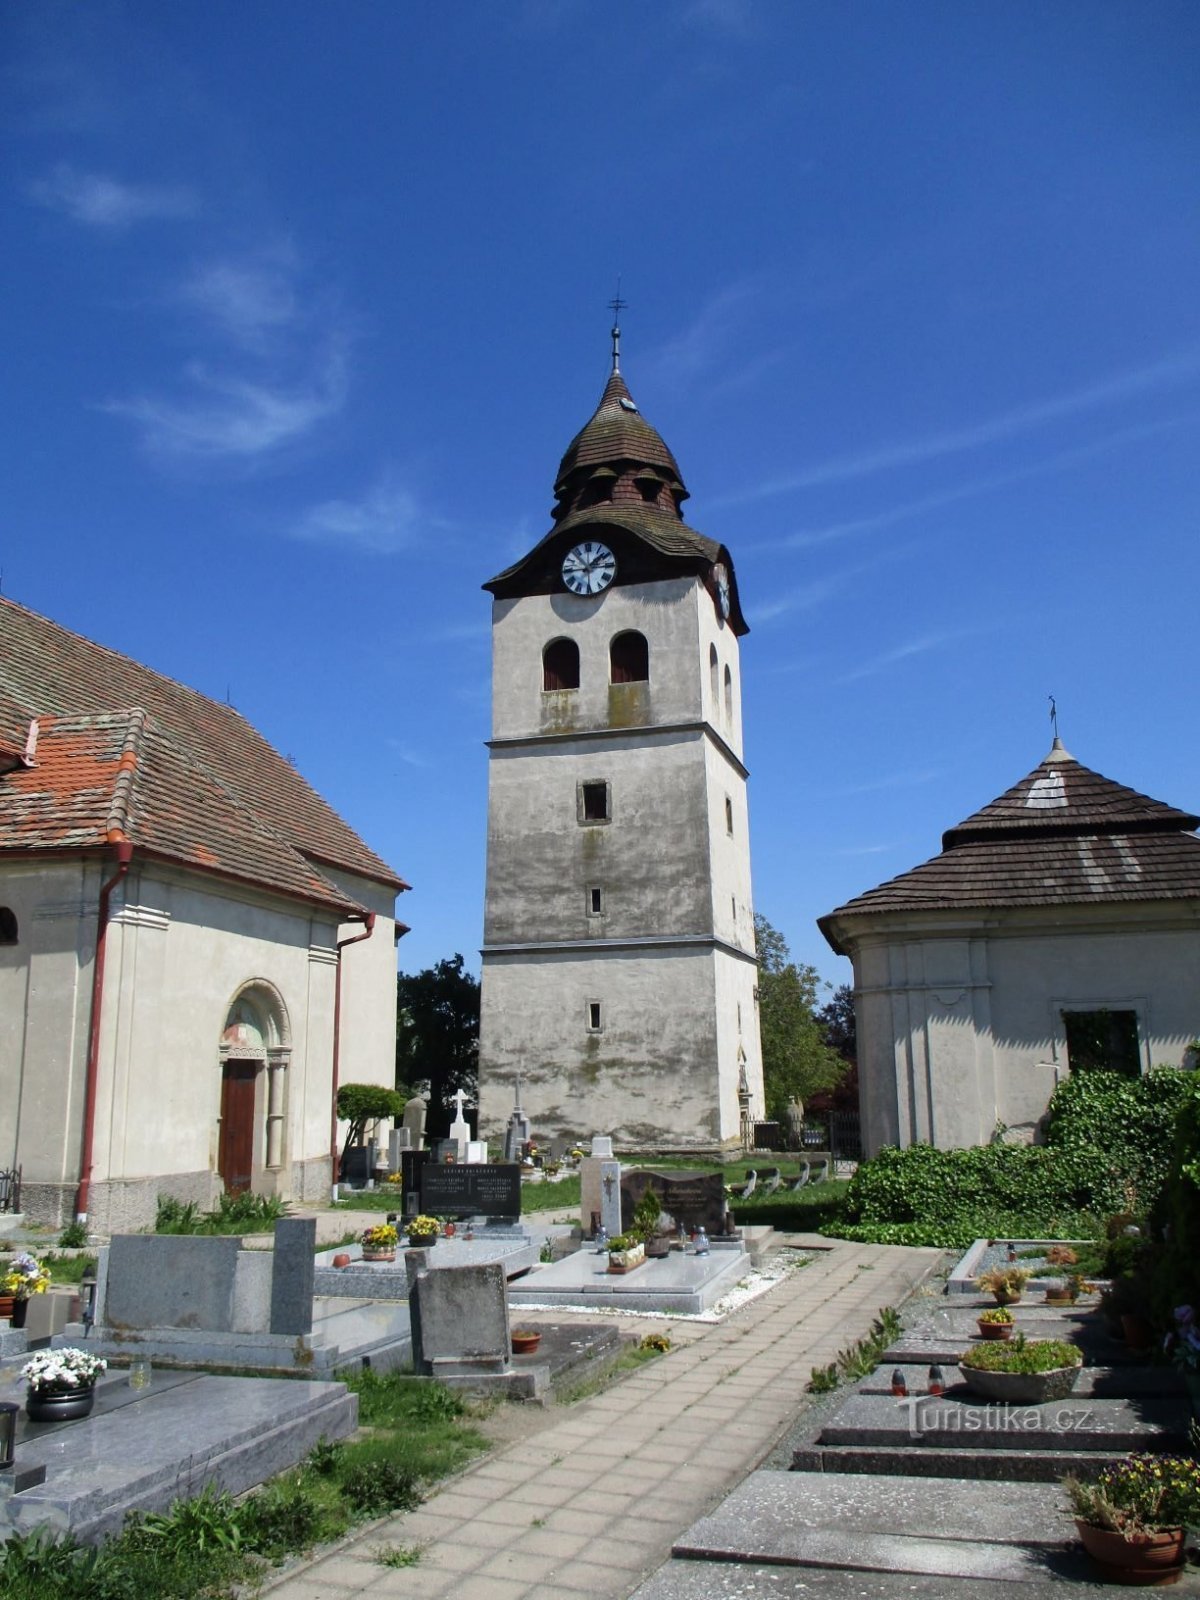 Campanile della chiesa di S. Nicholas (Bohuslavice nad Metují, 18.5.2020/XNUMX/XNUMX)